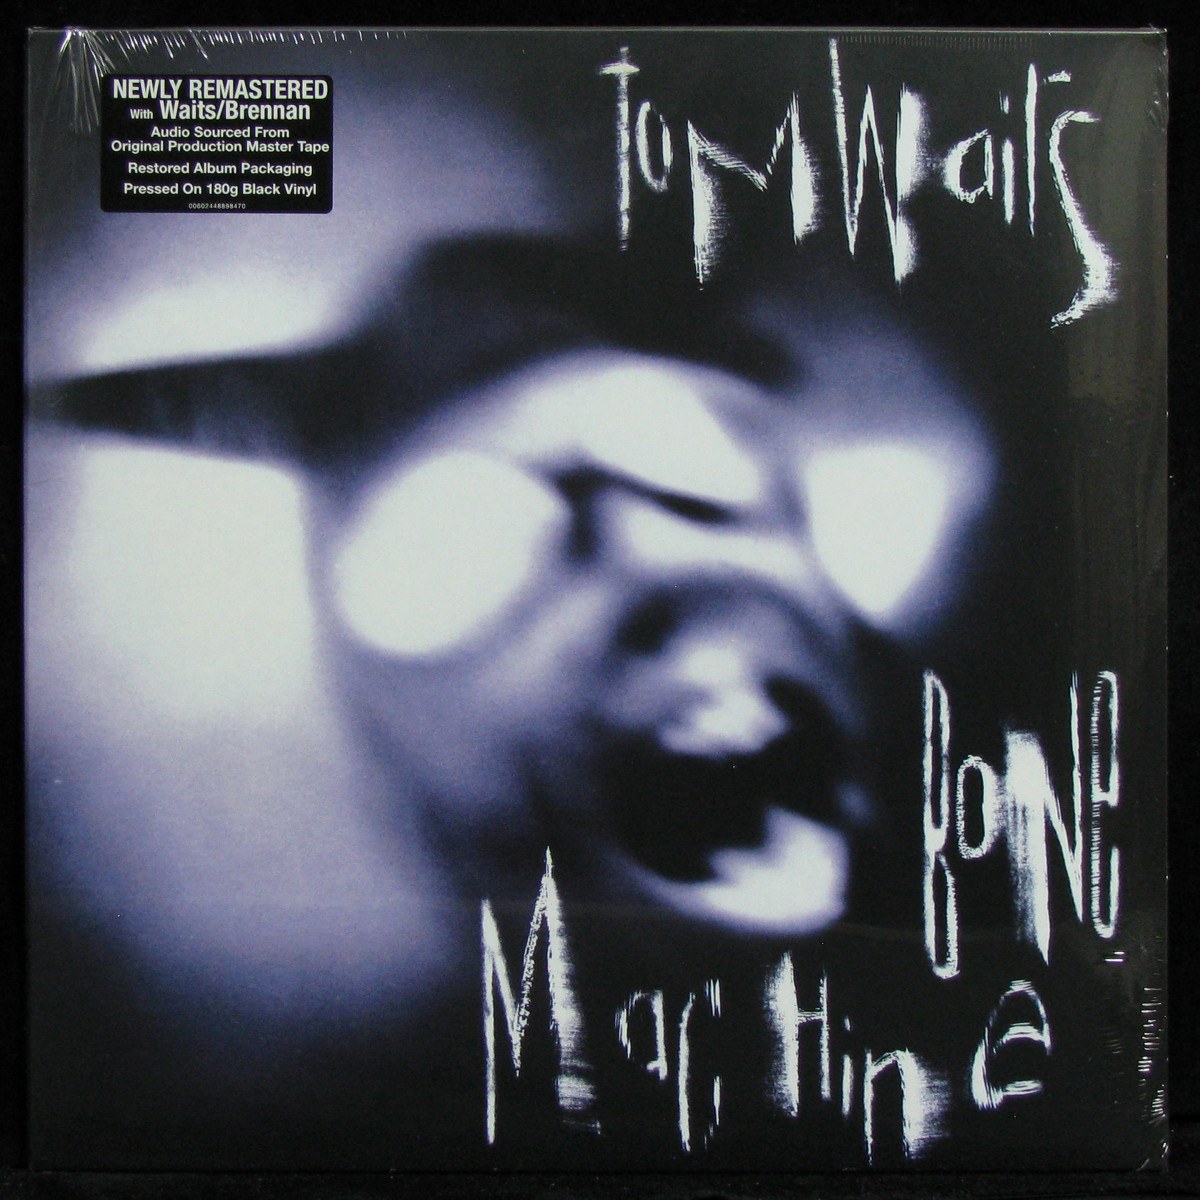 LP Tom Waits — Bone Machine фото